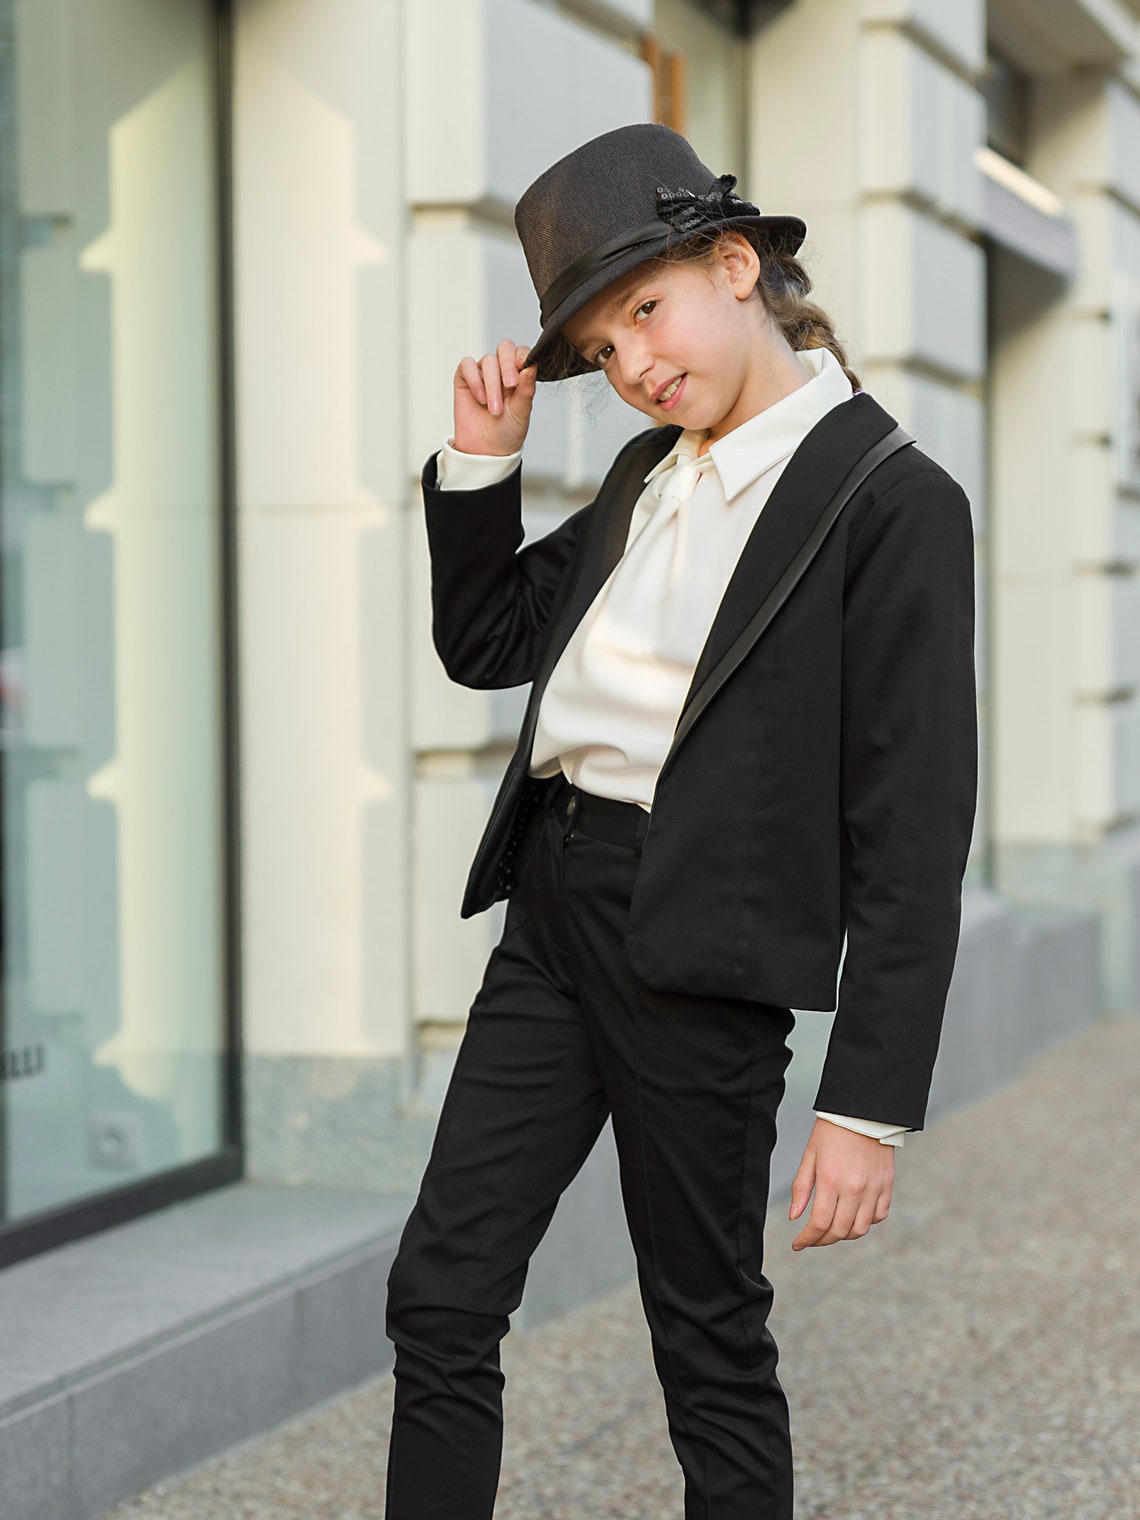 Black tuxedo suit girls/ Tailored toddler suit formal dress | Etsy